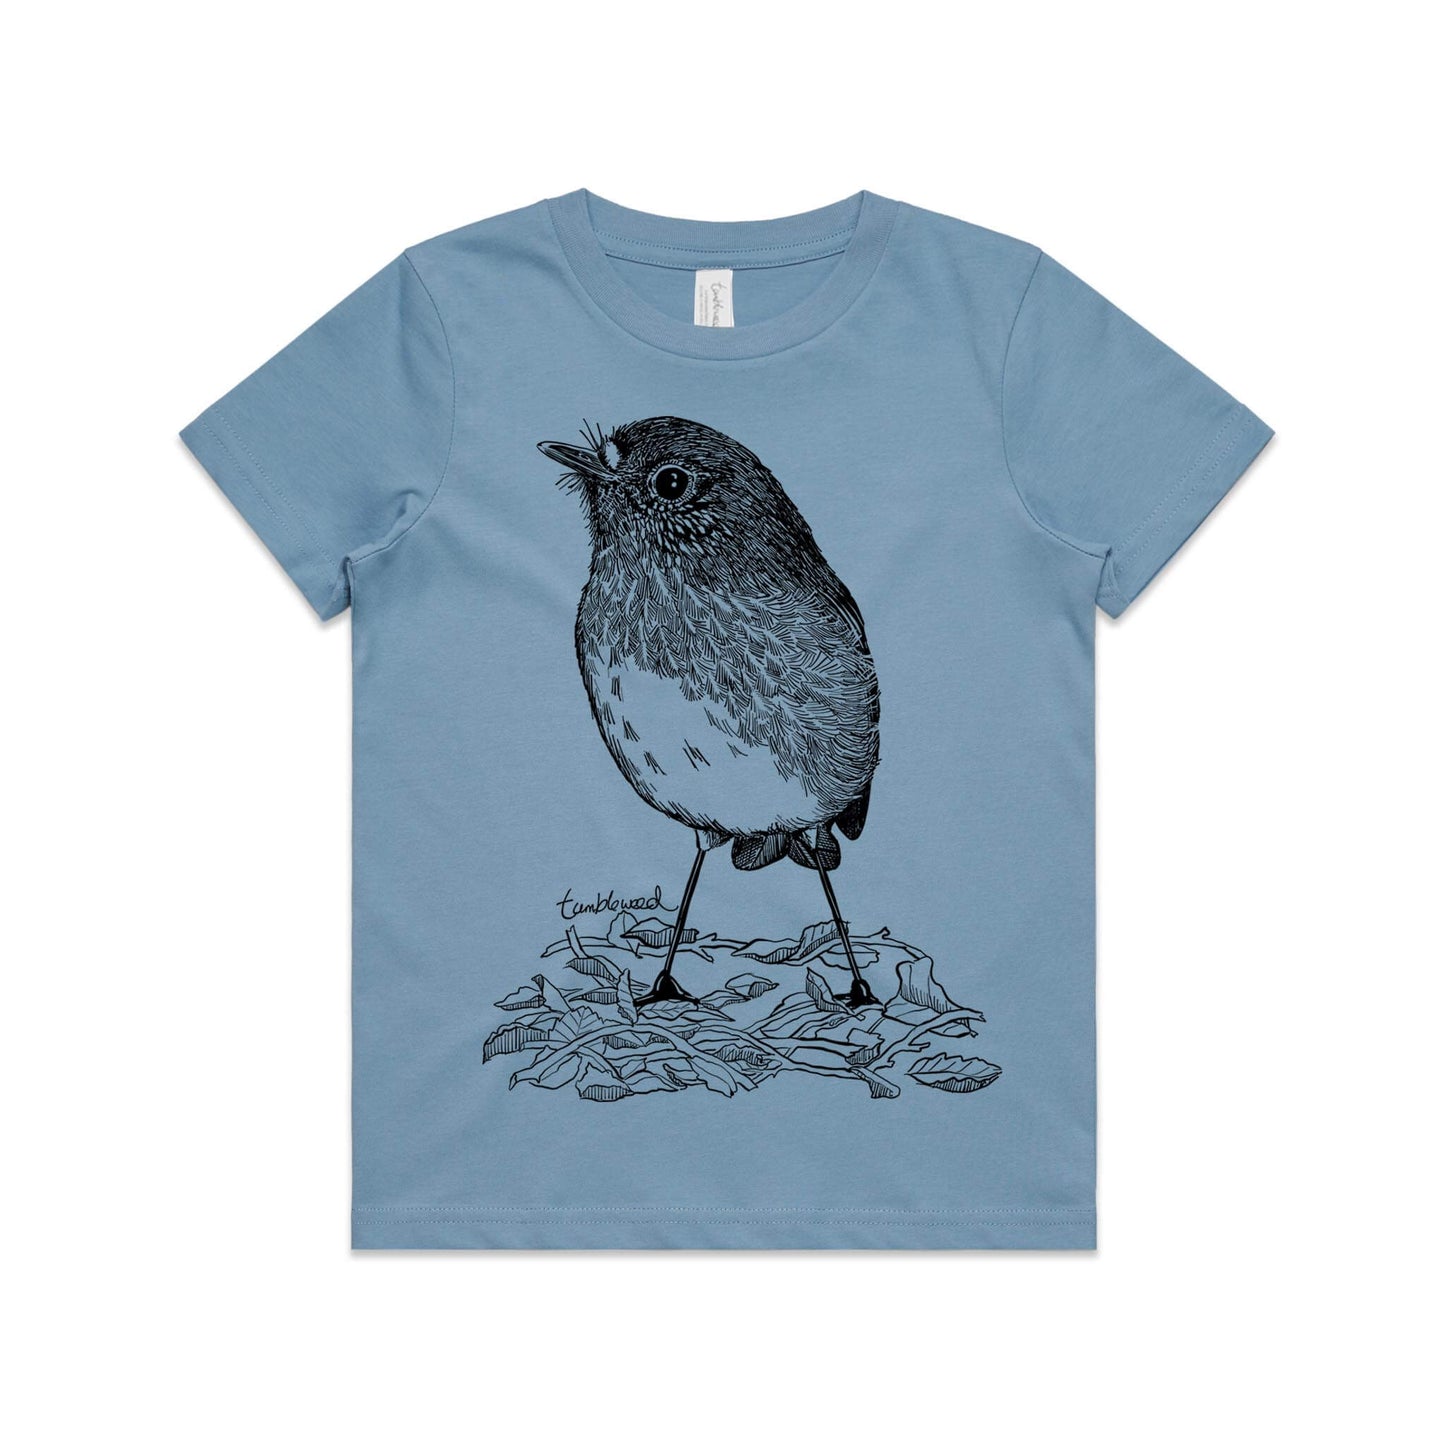 North Island Robin/toutouwai Kids’ T-shirt